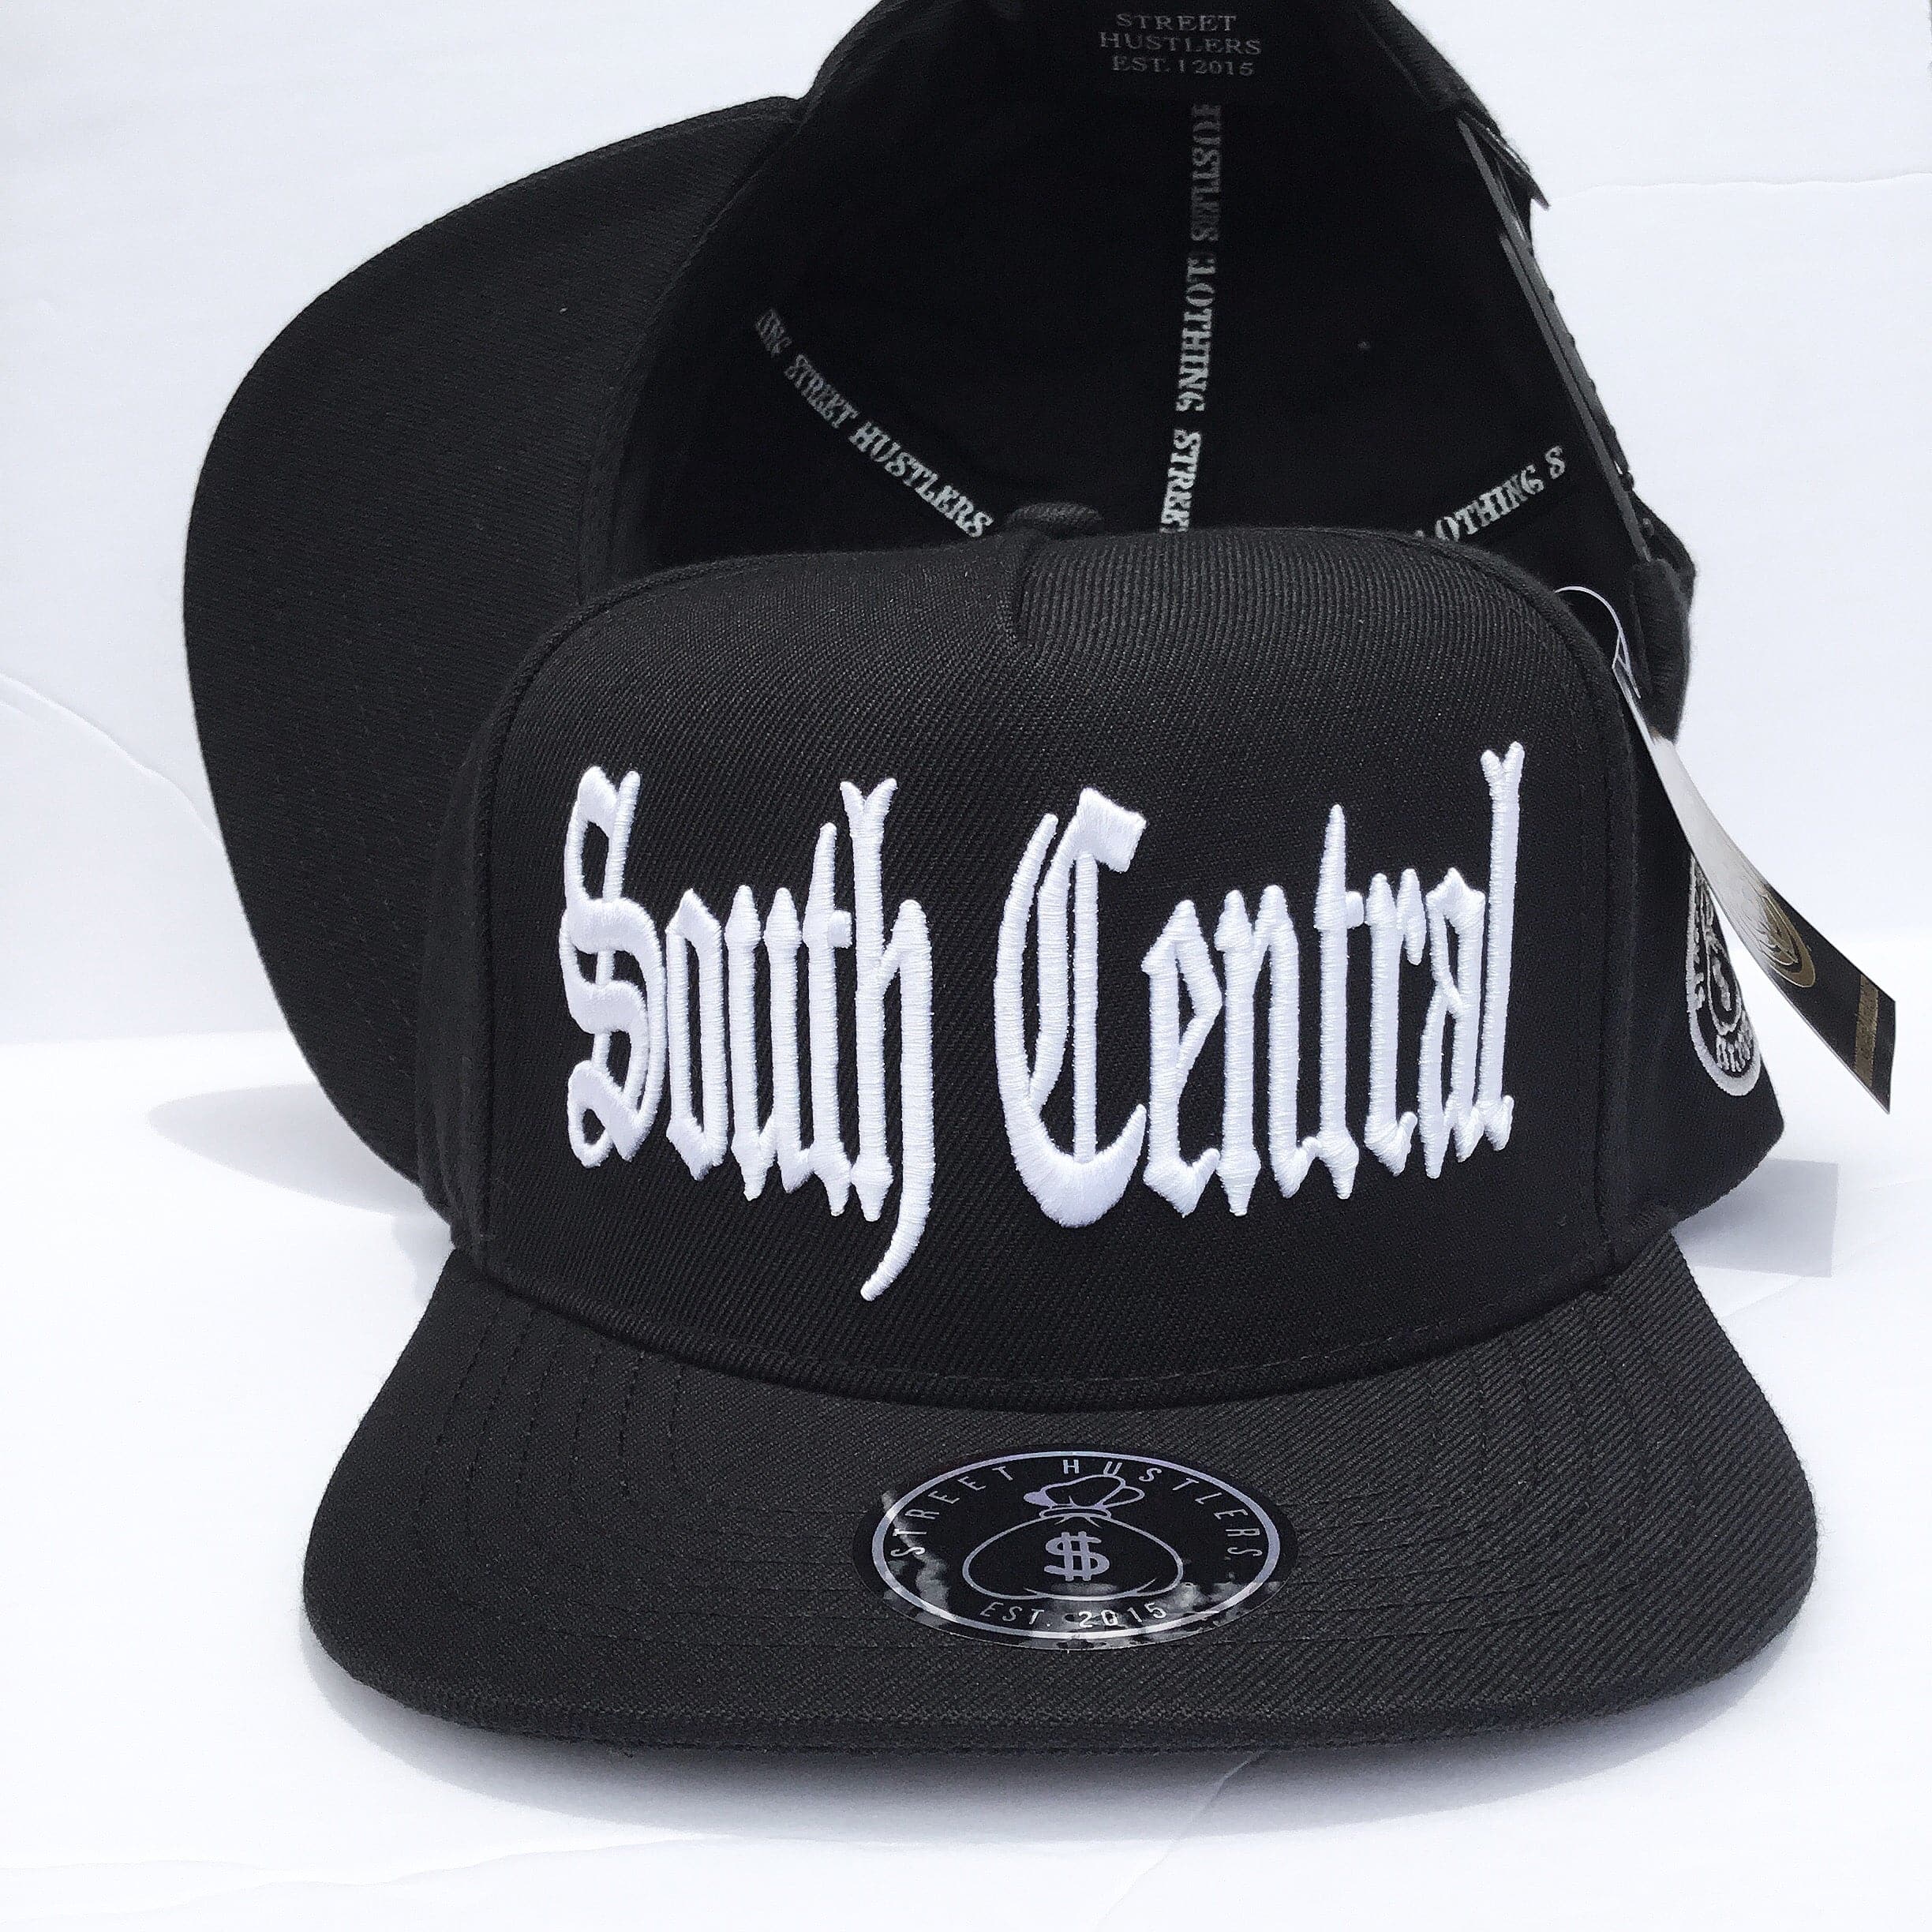 South Central SnpaBack (Black)